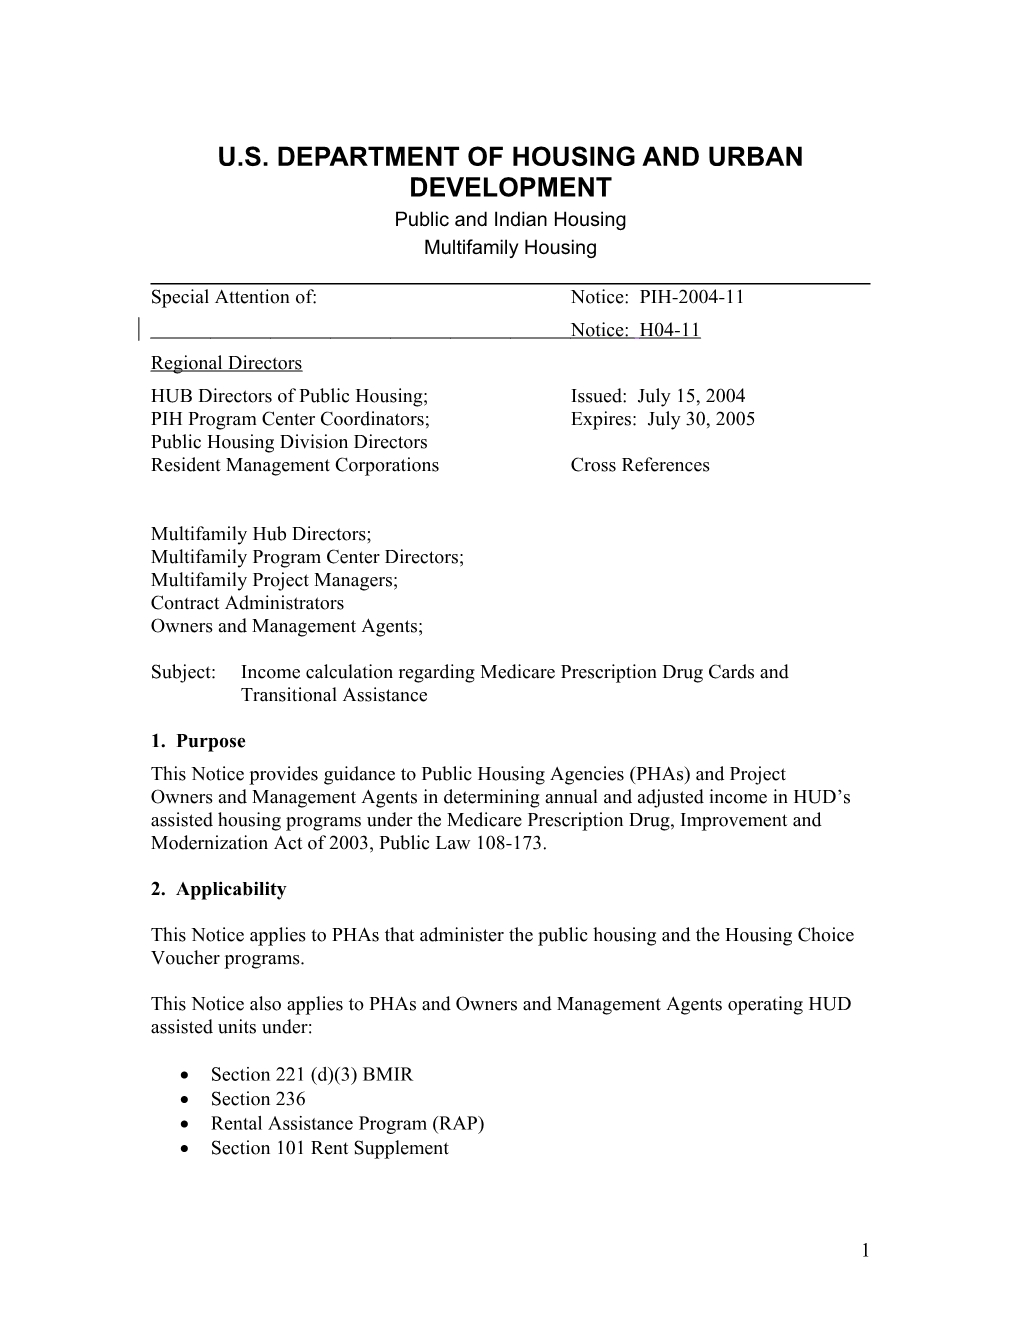 U.S. Department of Housing and Urban Development s13